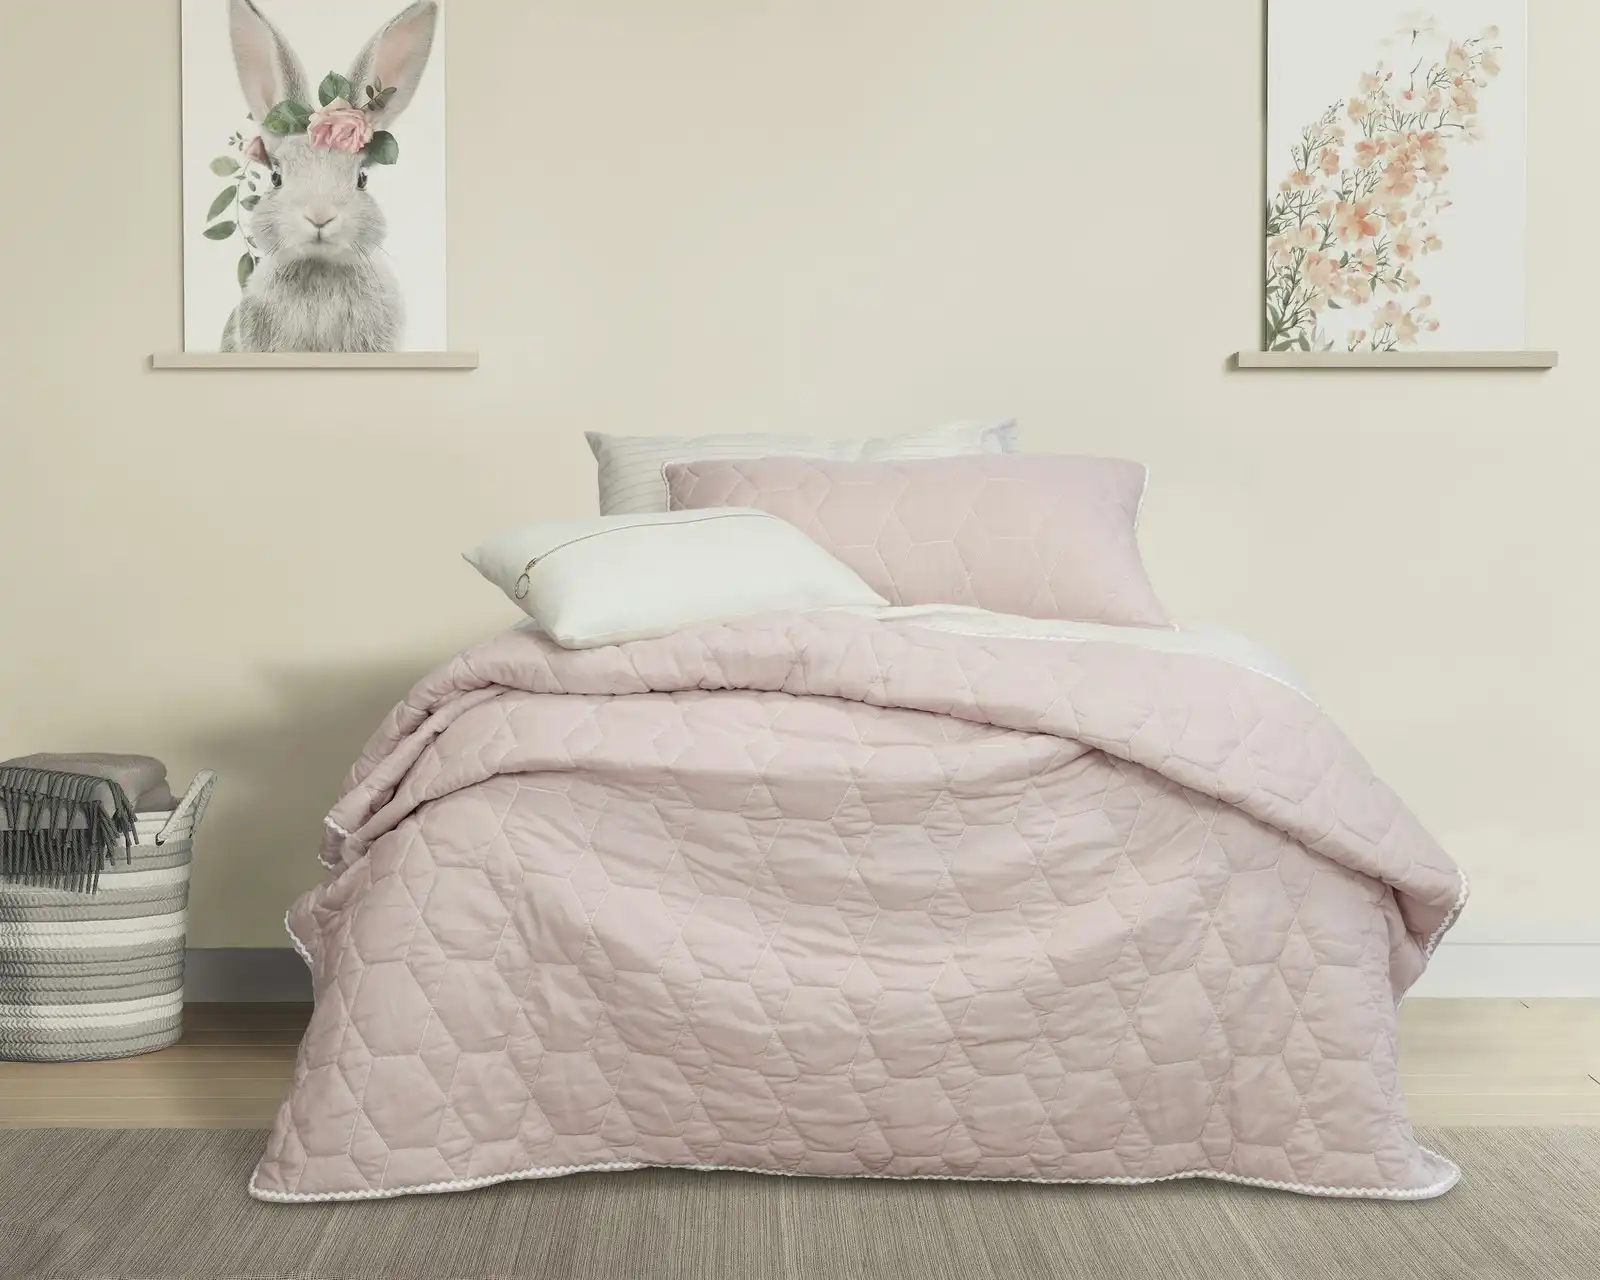 Jelly Bean Kids Bolston Single/Double Bed Coverlet Set w/ Pillowcase Pale Pink